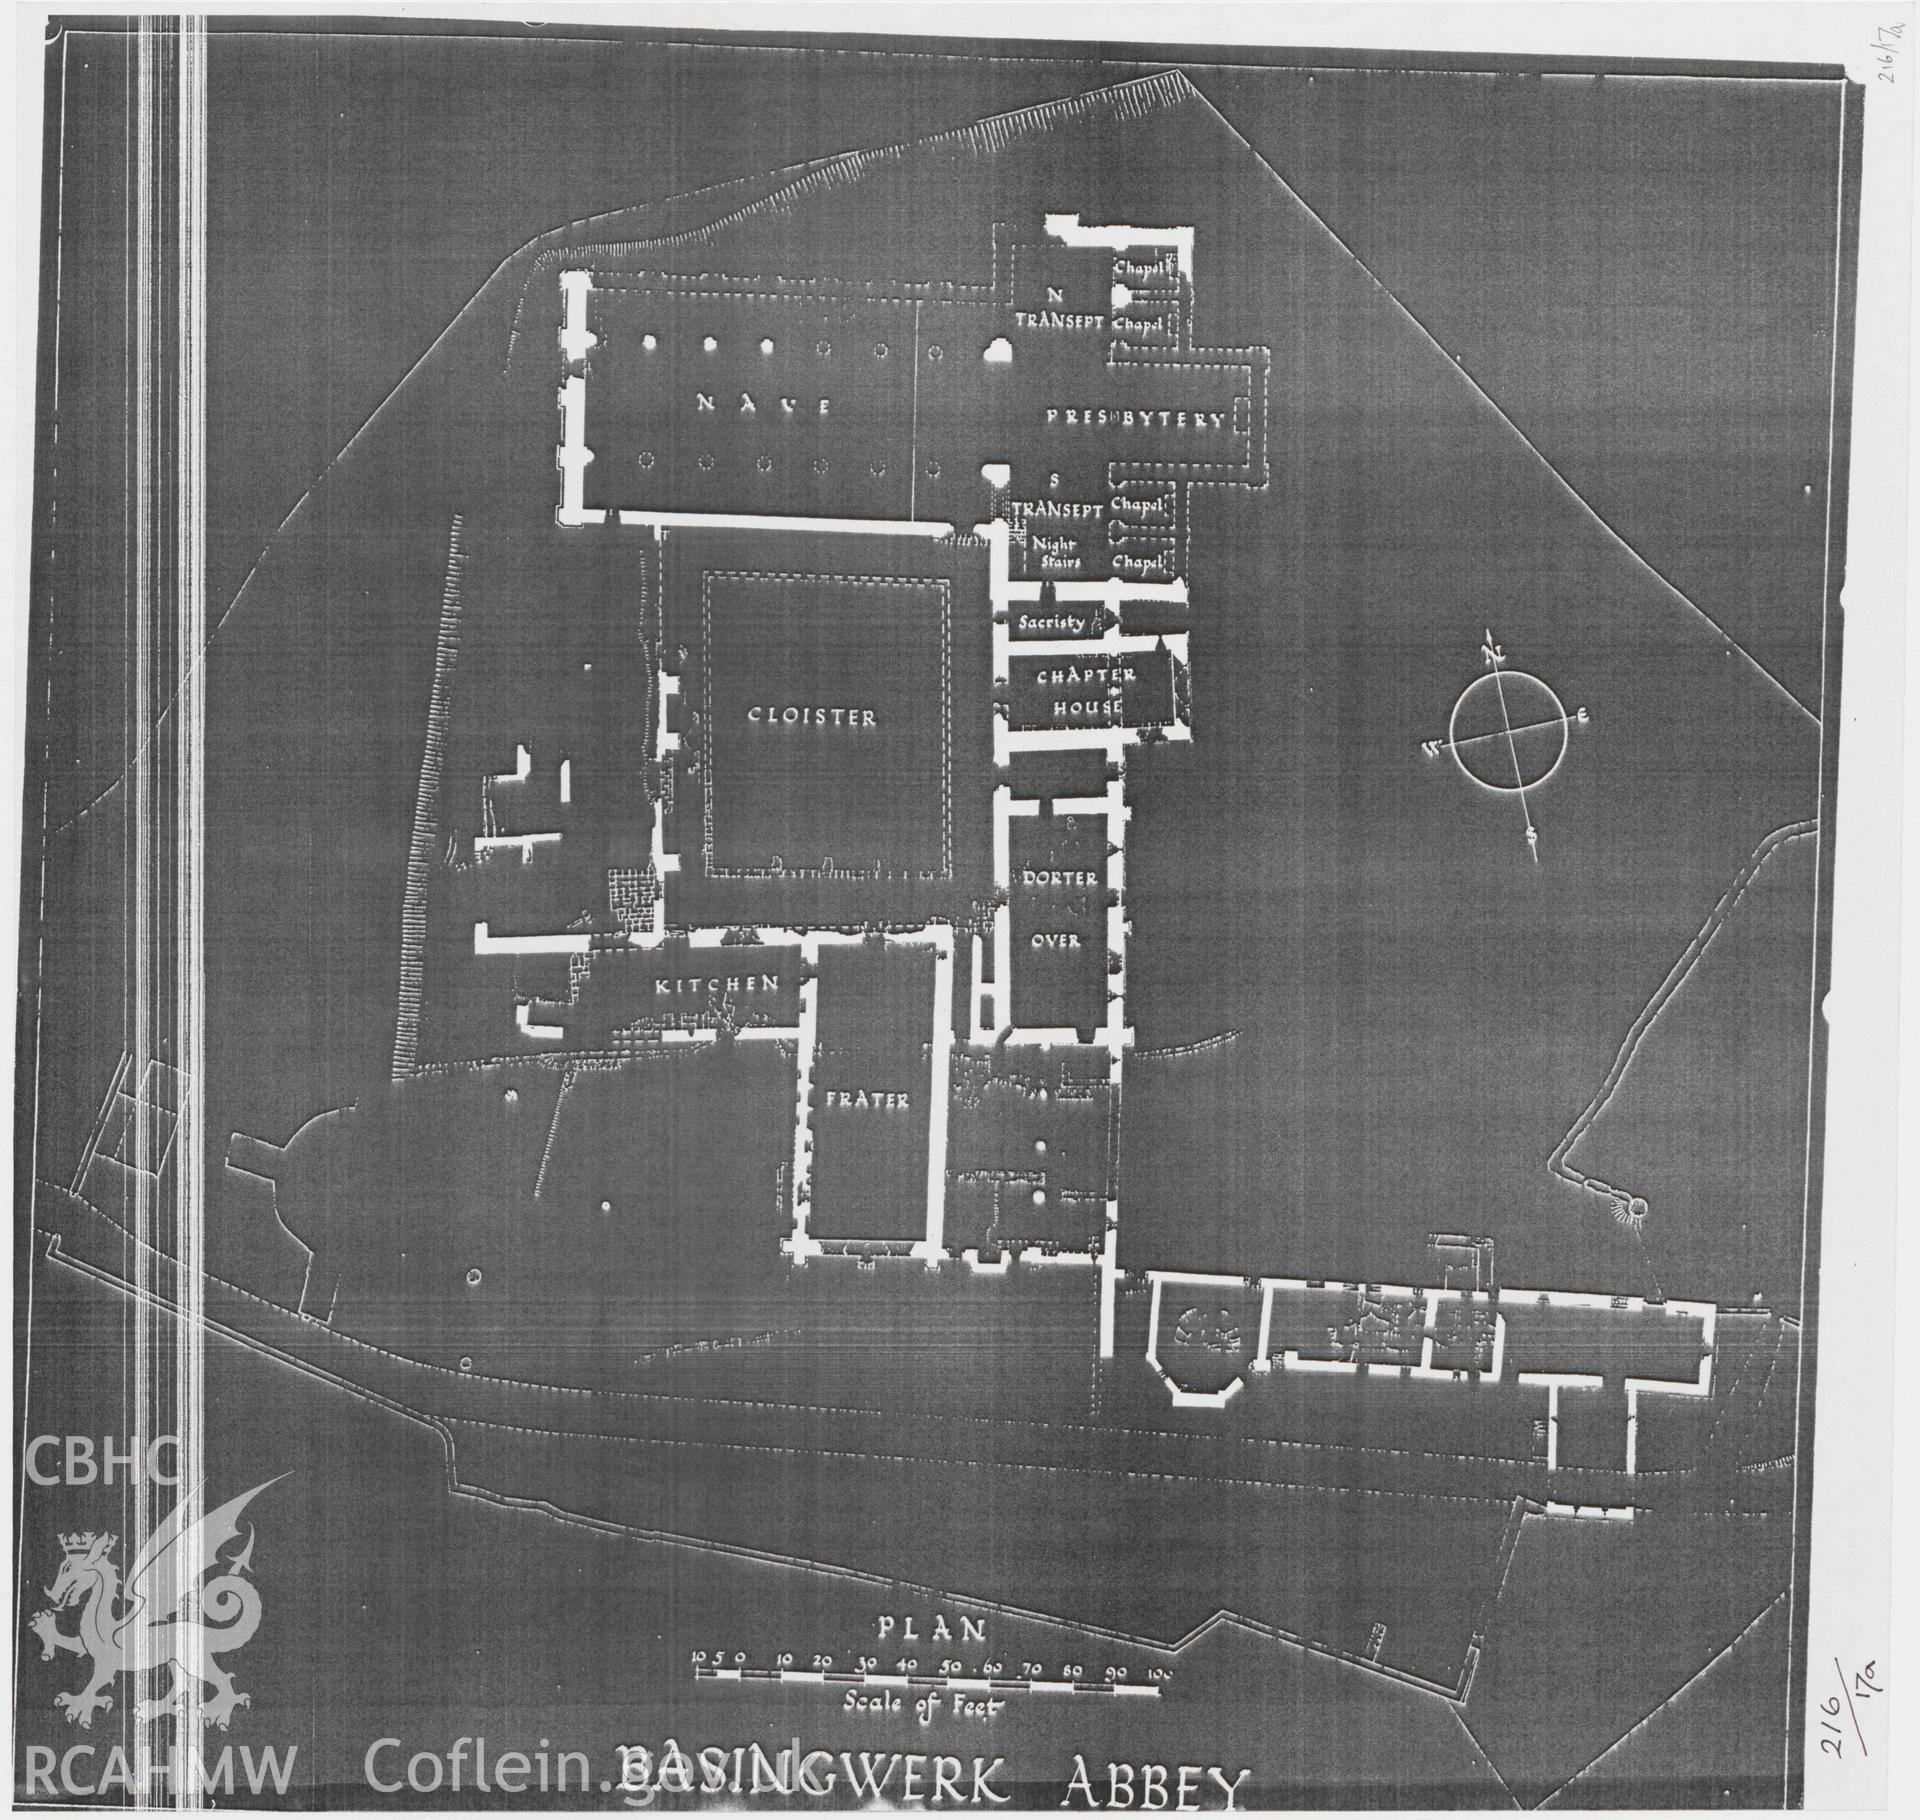 Cadw guardianship monument drawing of Basingwerk Abbey. General plan. Cadw Ref. No. 216/17a. Scale 1:c312.